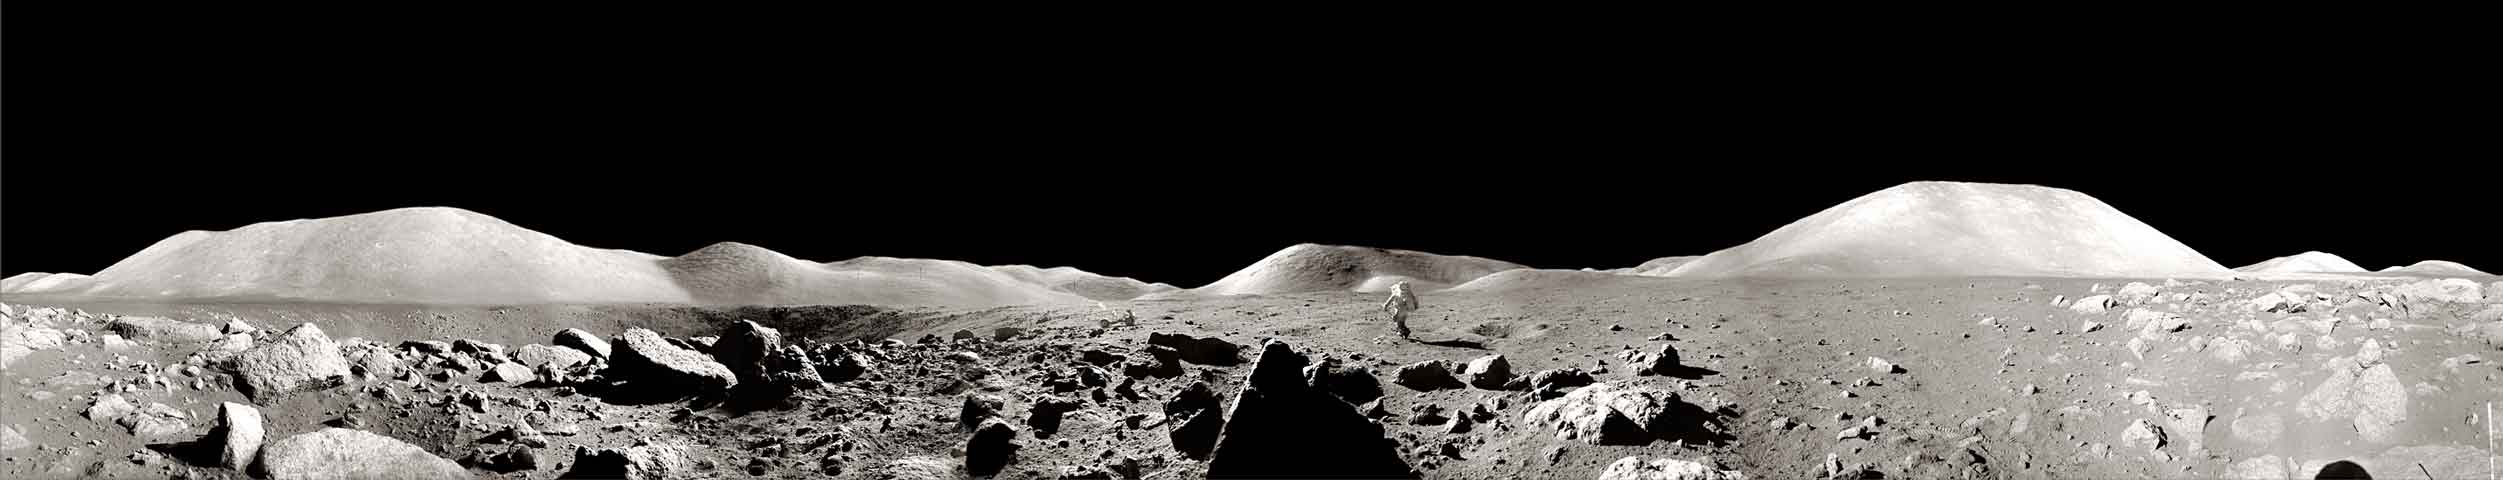 Apollo 17 Panorama Astronaut Running